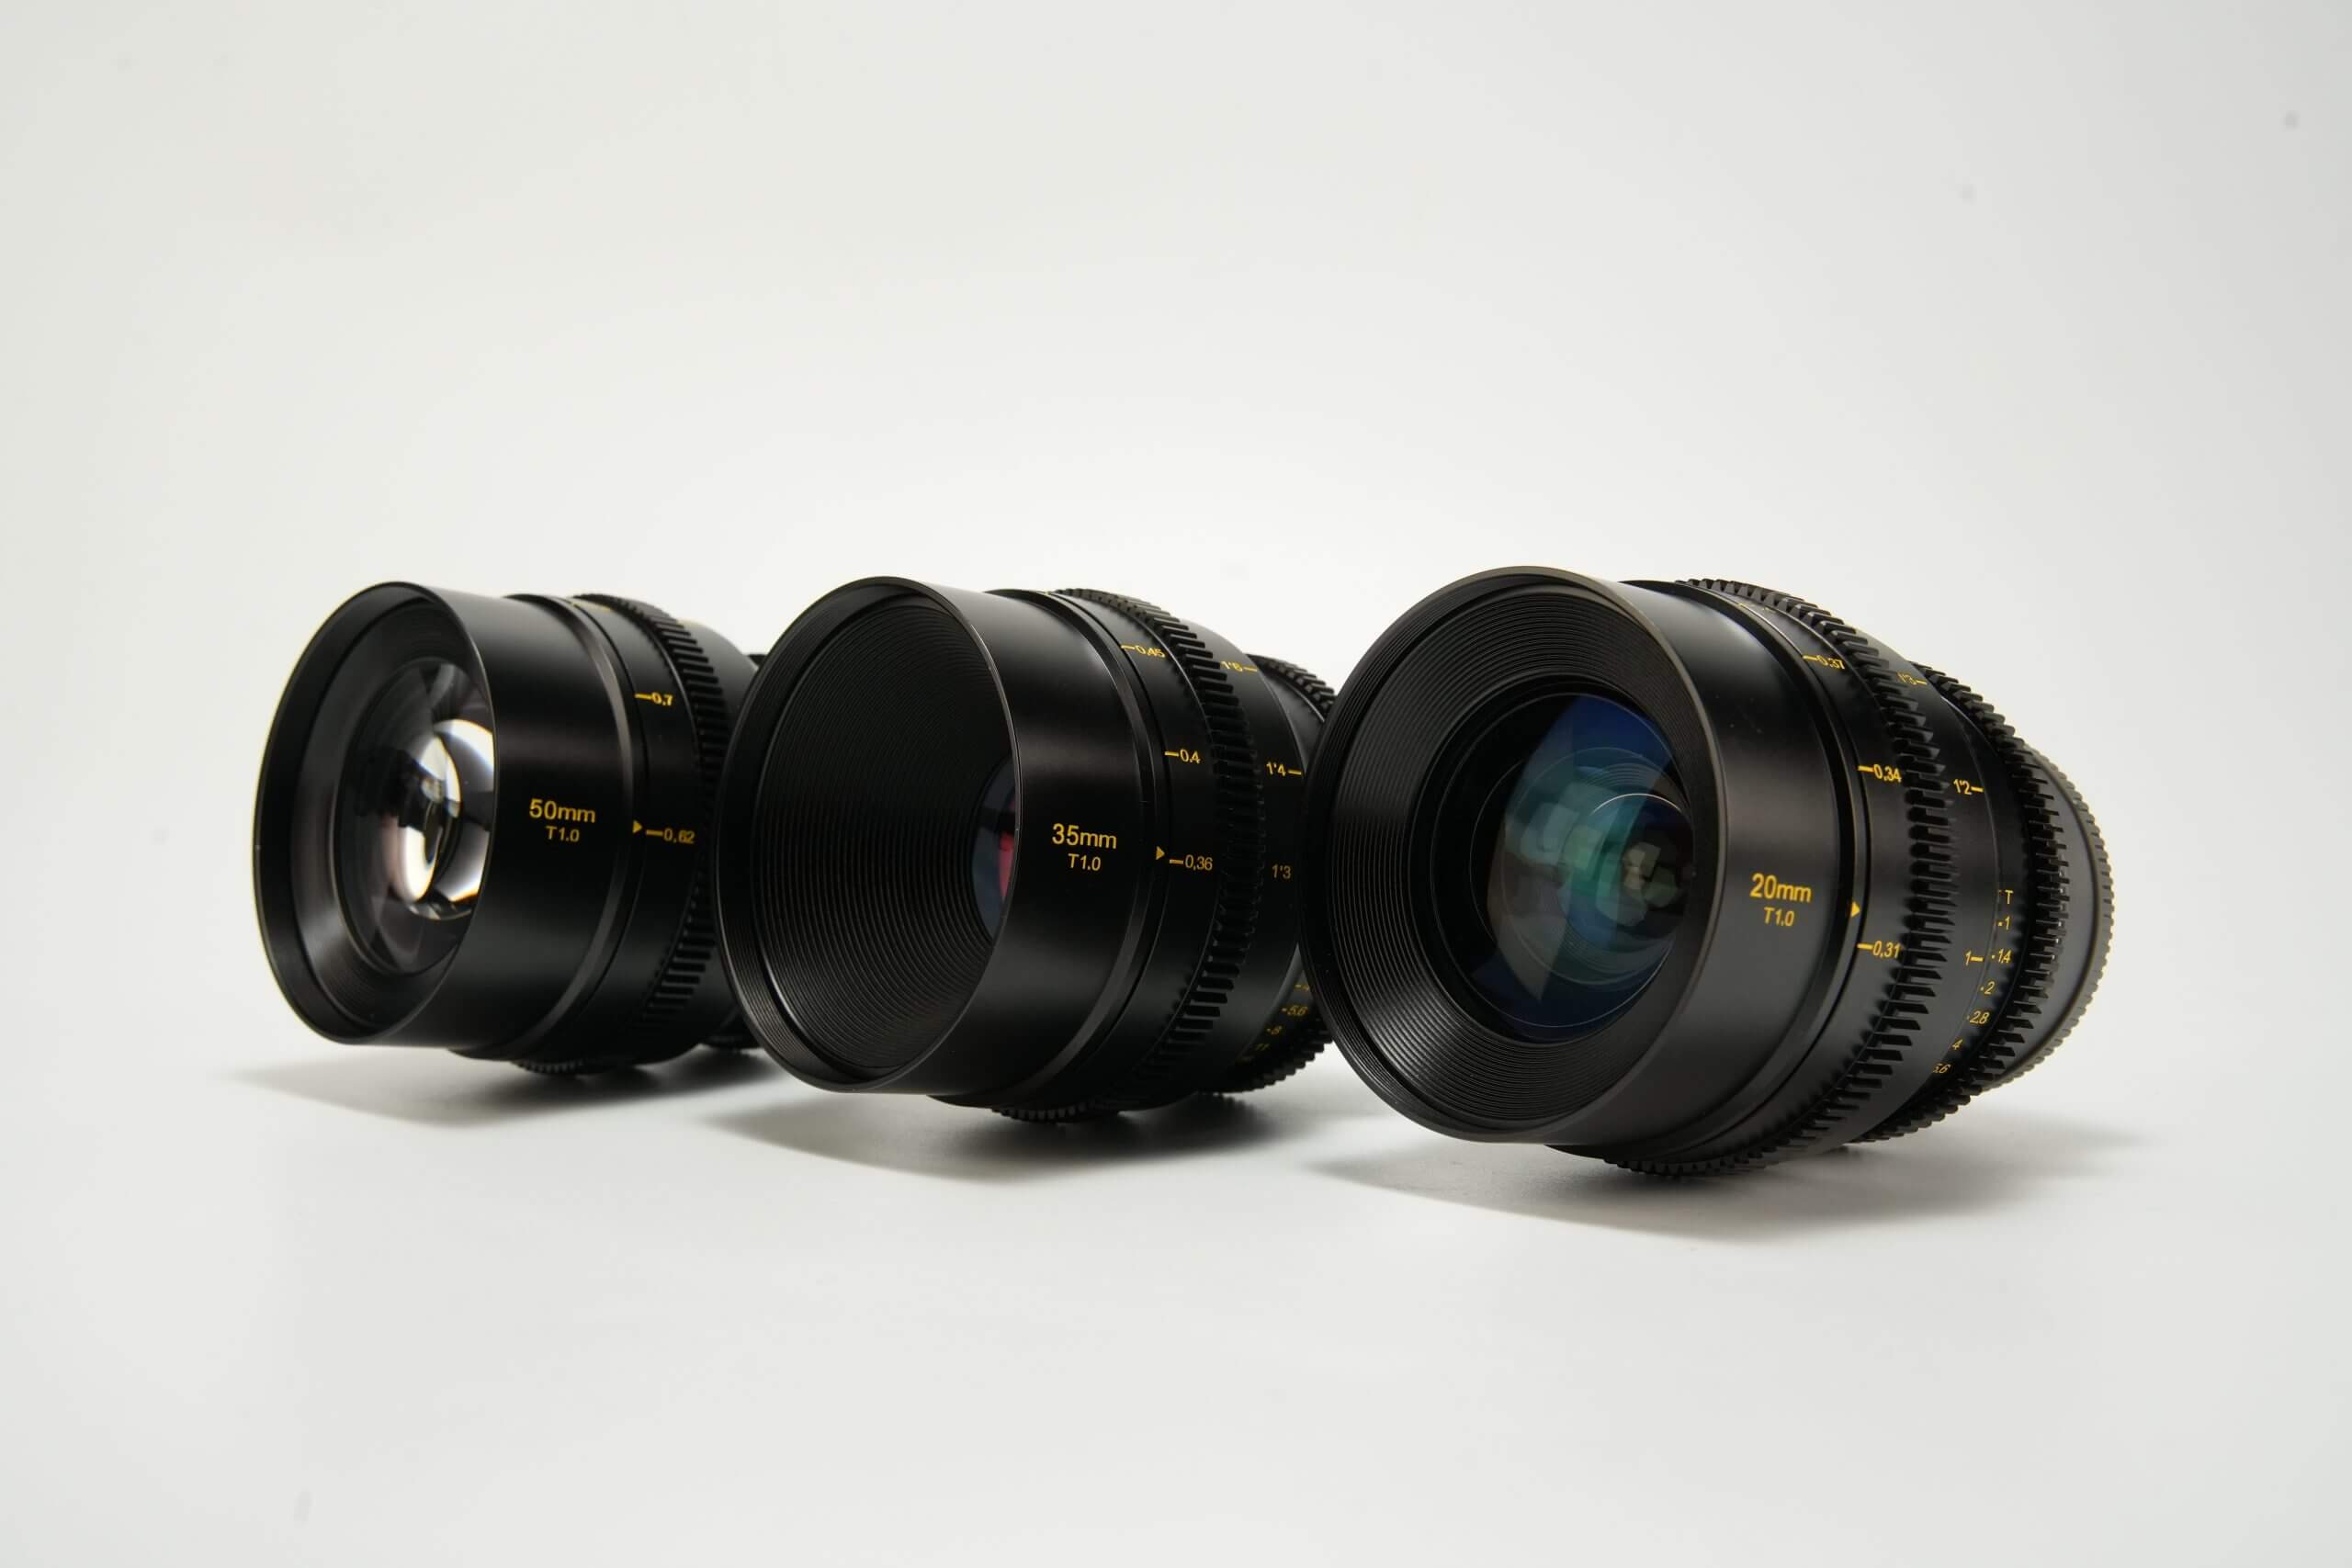 DSC07744 scaled - Mitakon Speedmaster 20mm/35mm/50mm S35 T1 Cine Lens Set Launched